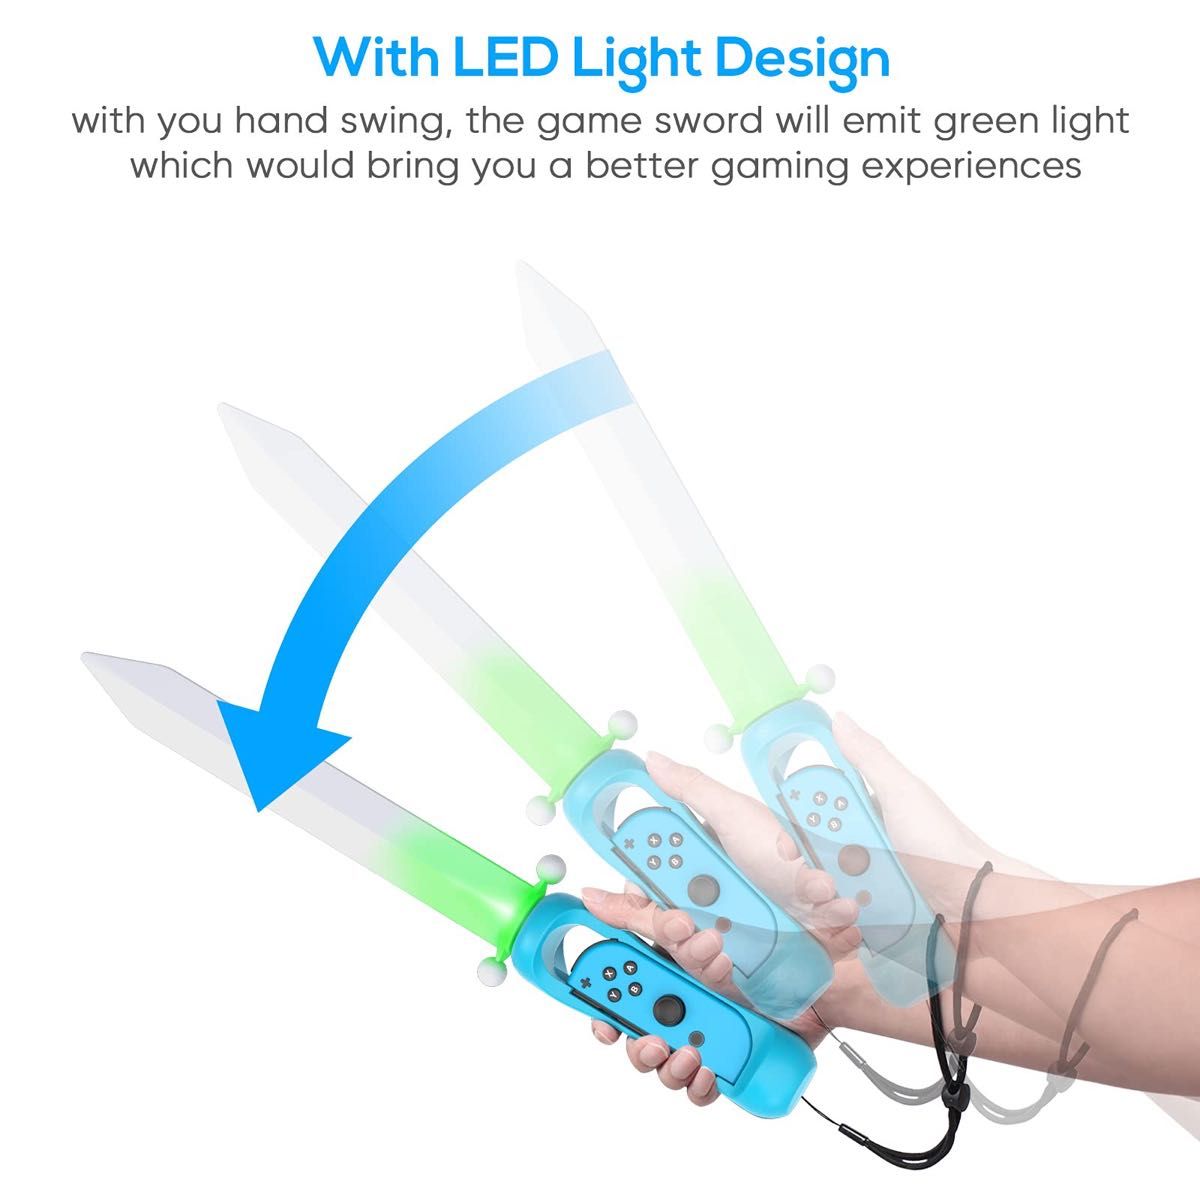 LEDゲームソード スイッチ/スイッチ用 OLED Joy Cons ハンドグリップソード ゼルダの伝説 スカイワードソードHD